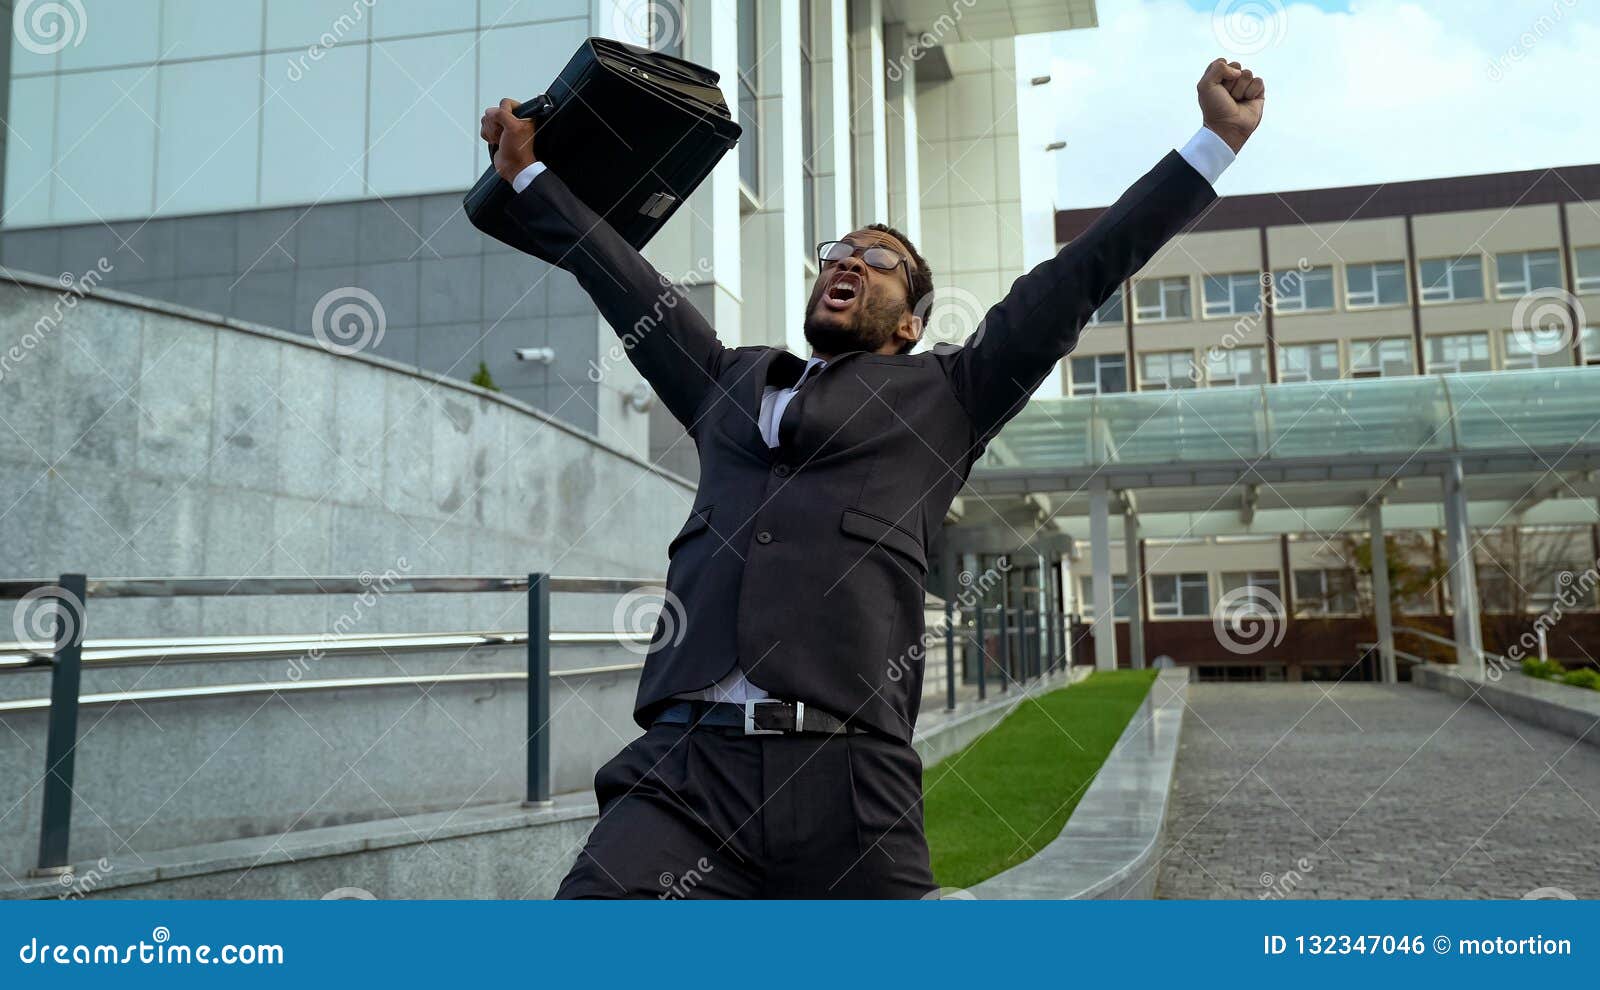 very happy mulatto office employee shouting joyfully, career promotion success